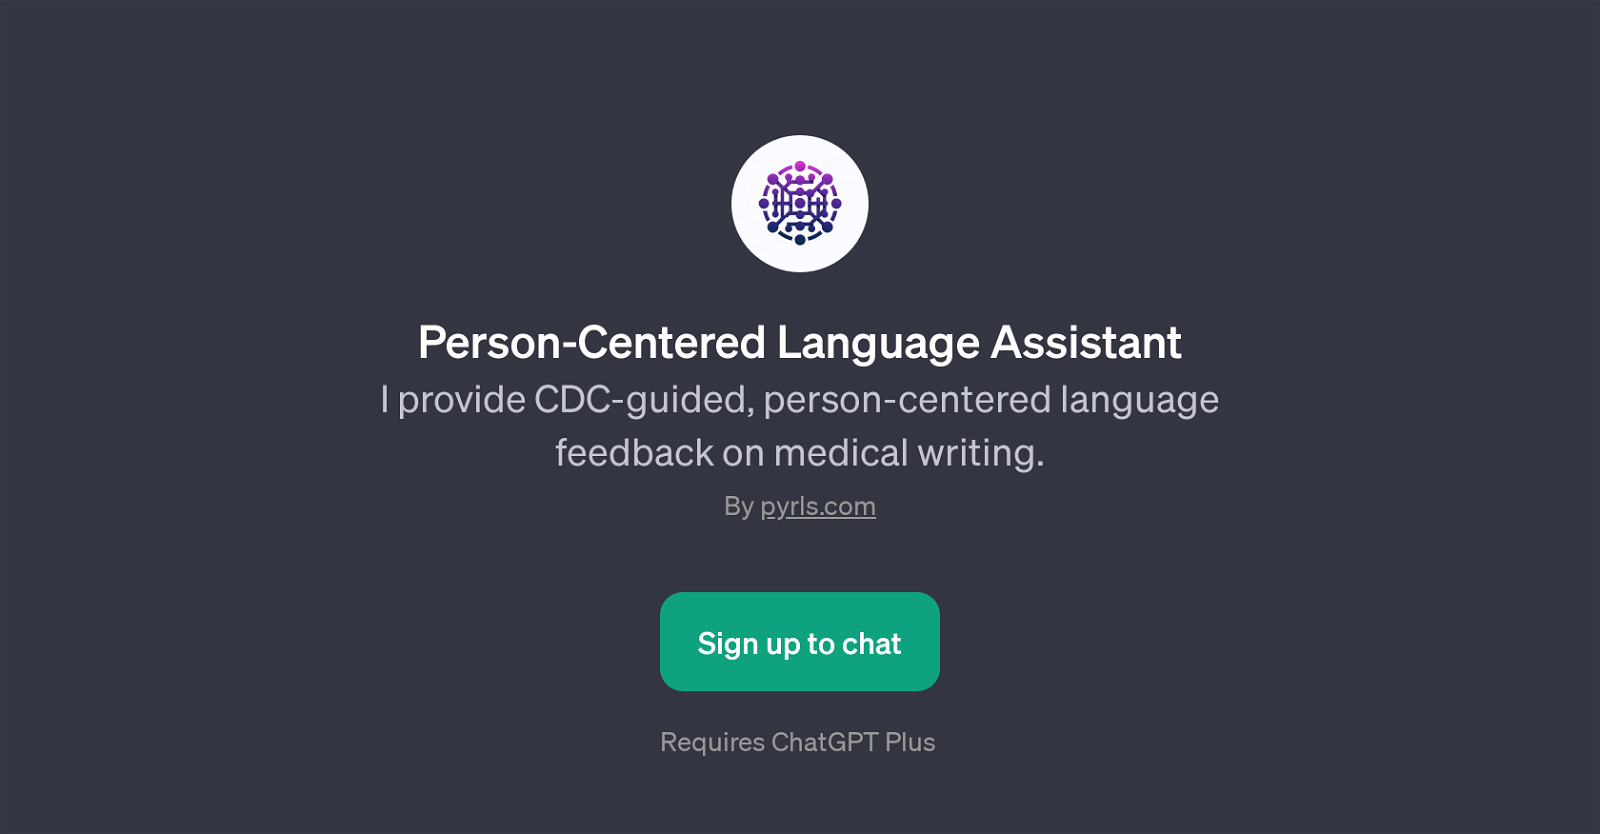 Person-Centered Language Assistant website